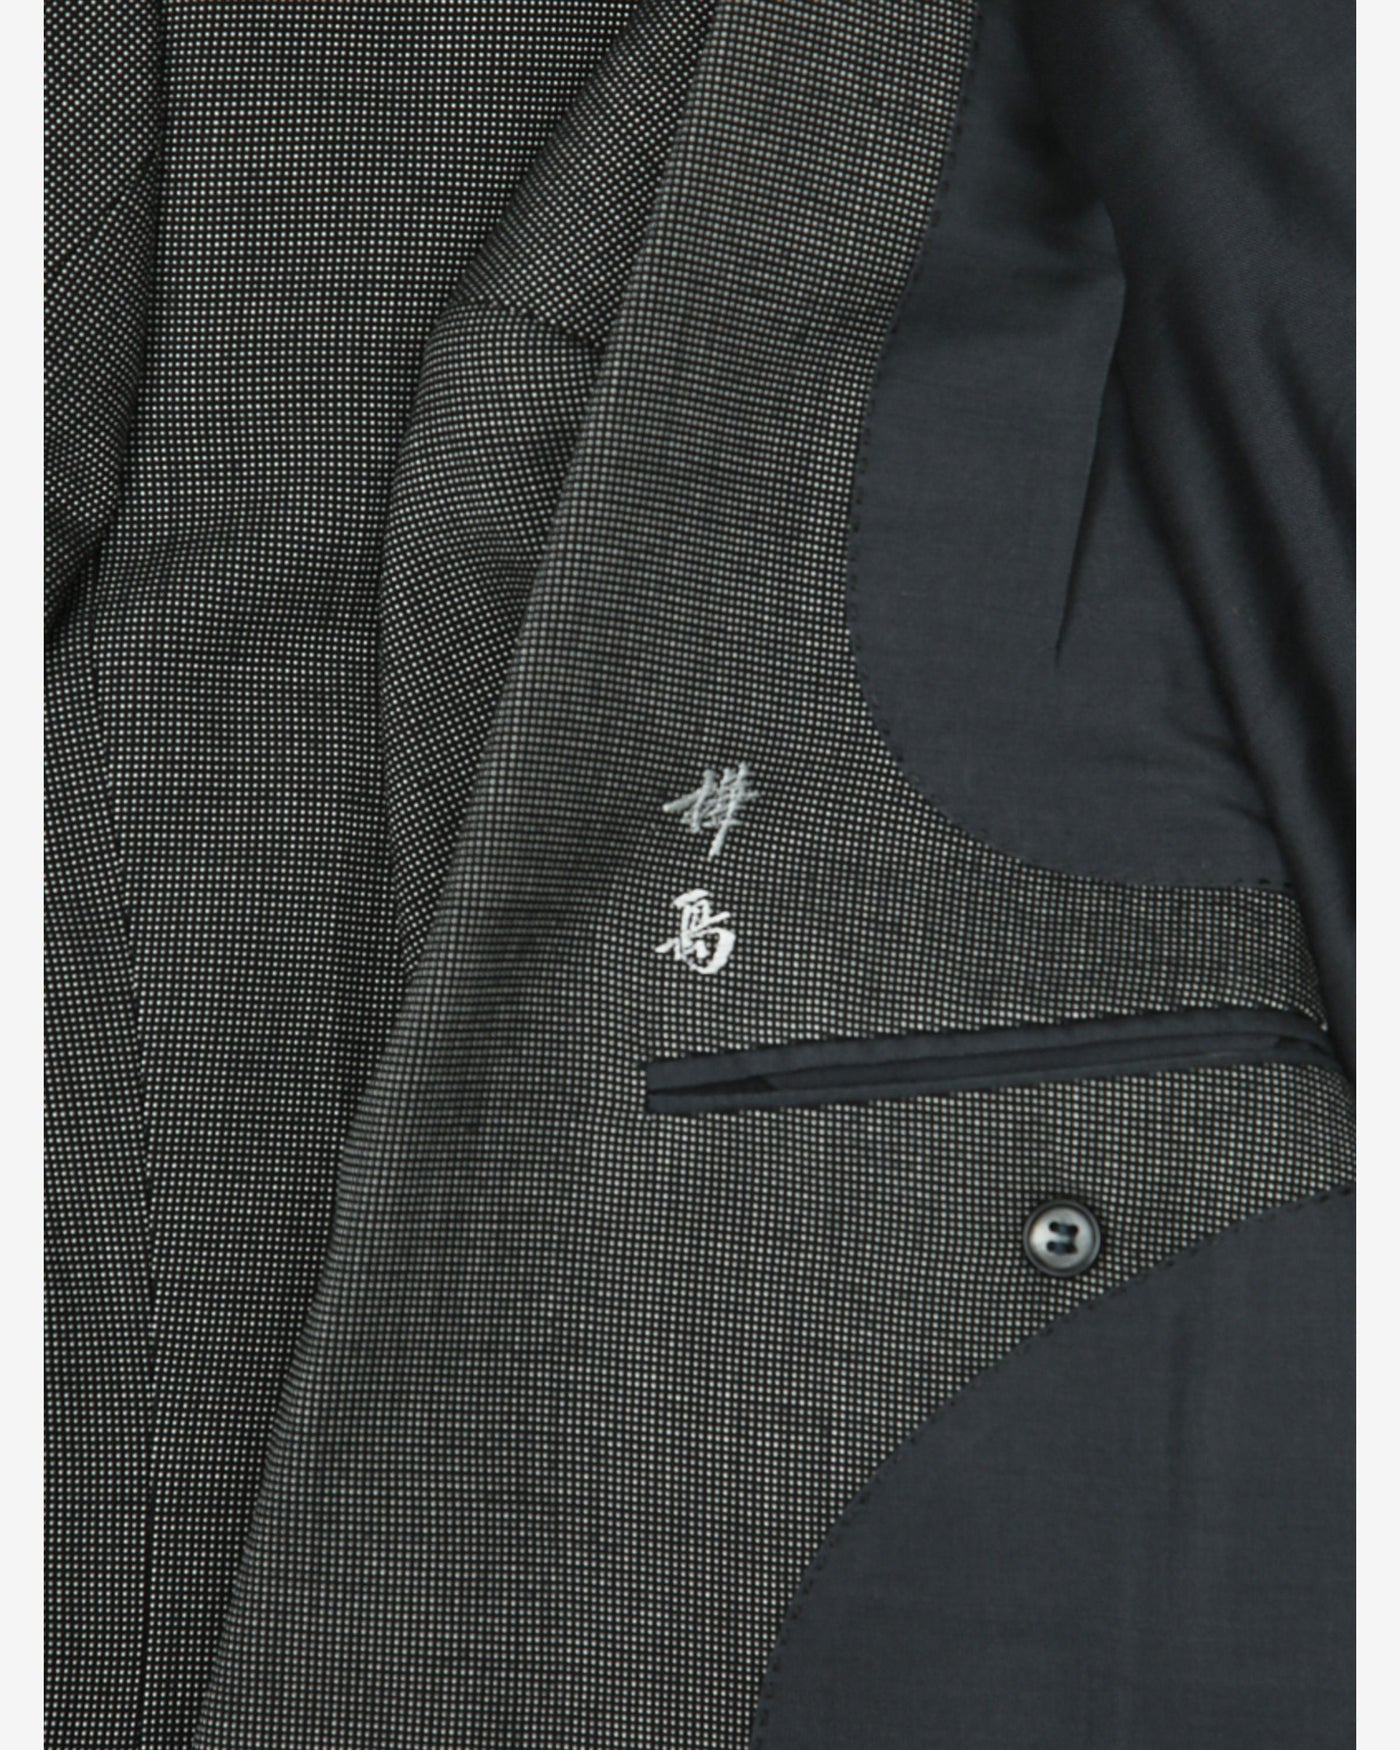 Vintage Melbo Simspon Dark Grey / Black Patterned Two-Piece Suit - L